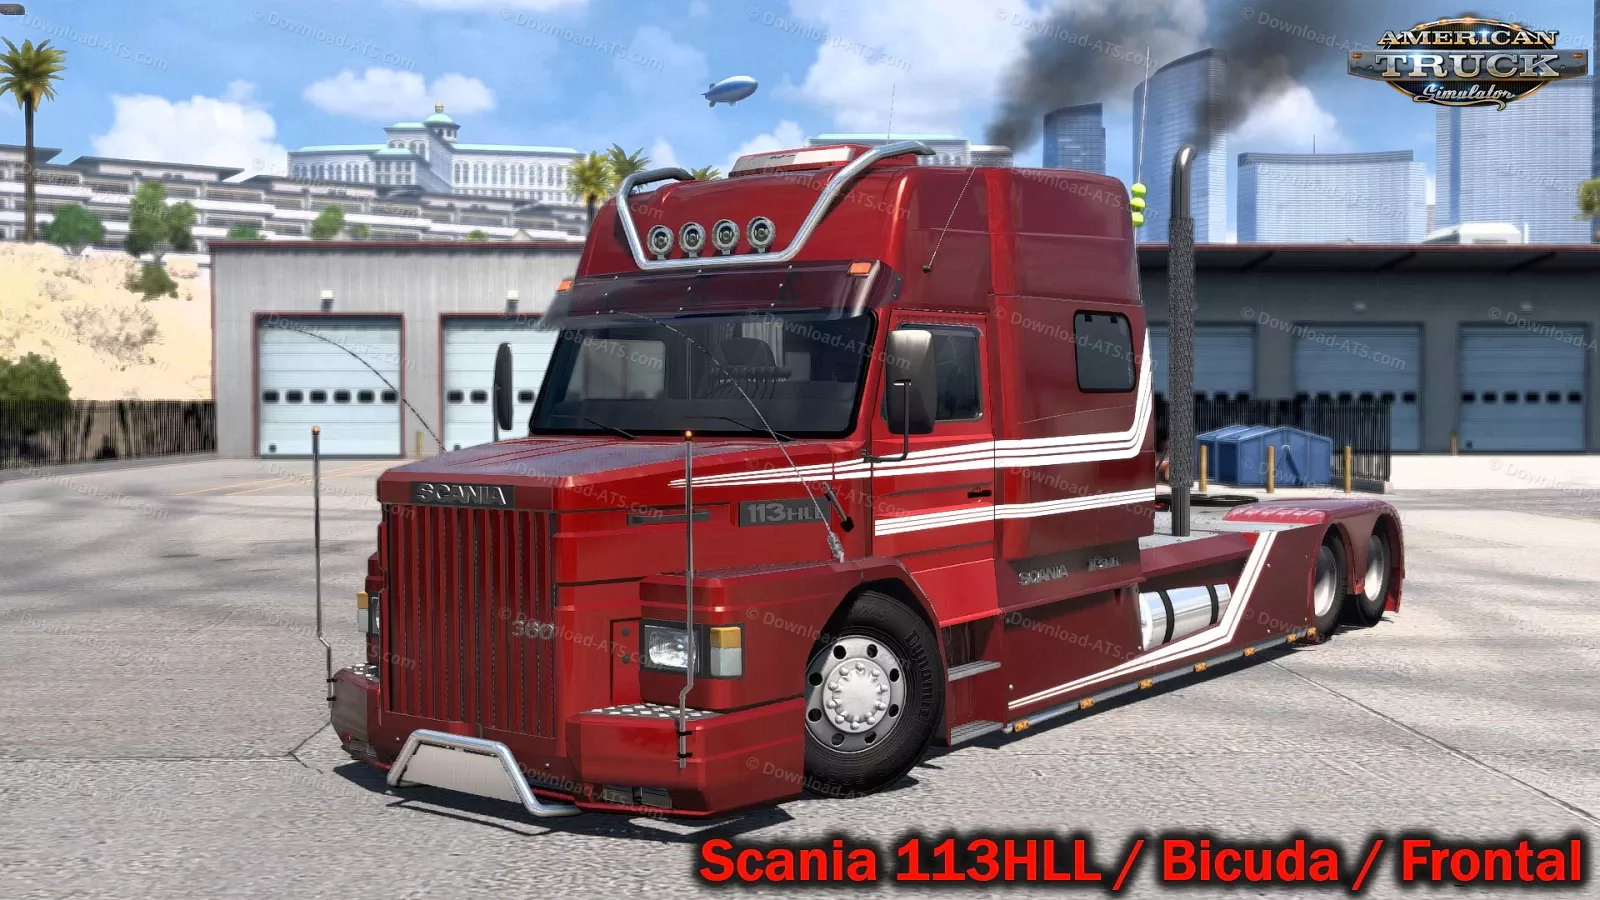 Scania 113HLL / Bicuda / Frontal v1.2 (1.50.x) for ATS